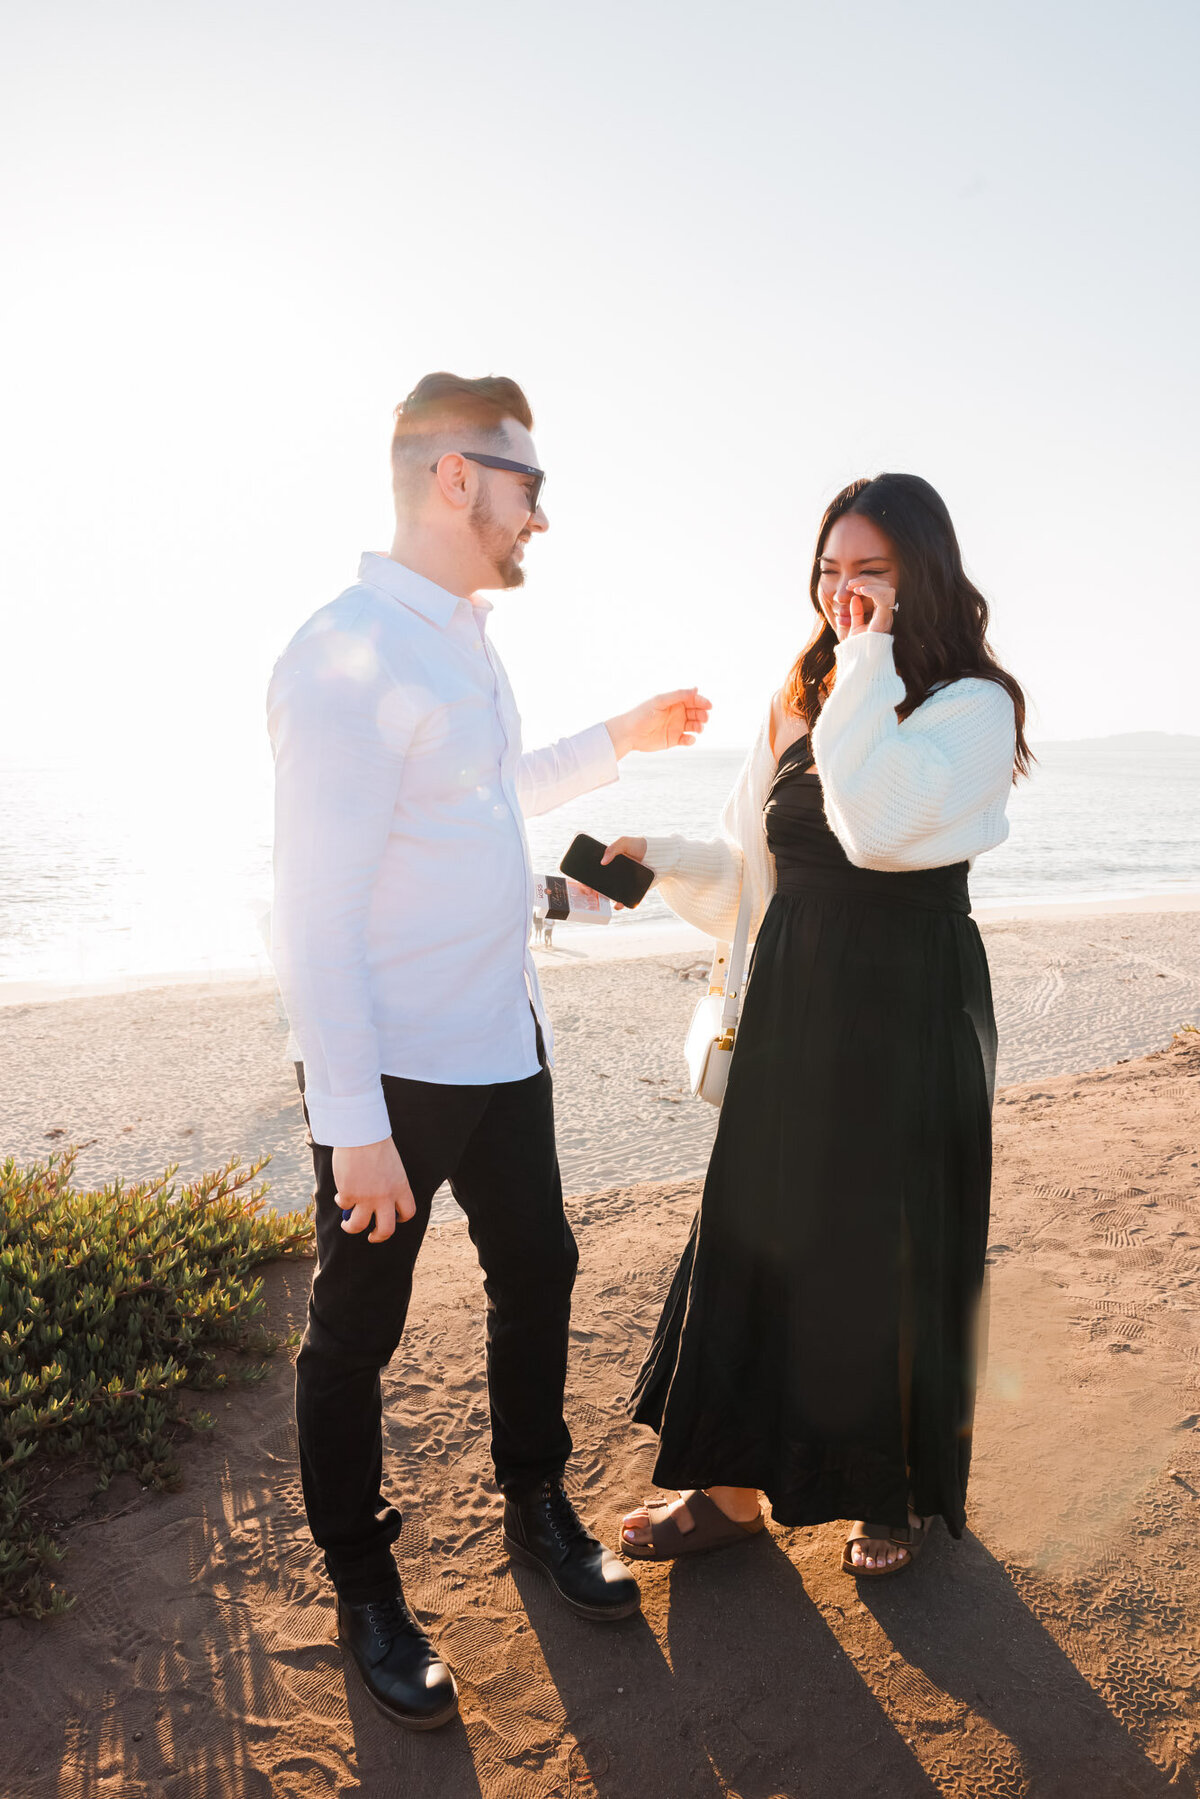 Kyle Woolum + Stephanie-Proposal Engagement-Half Moon Bay-Dunes Beach-San Francisco Wedding Photographer-San Francisco Photographer-Half Moon Bay Photographer-Emily Pillon Photography-S-092323-17